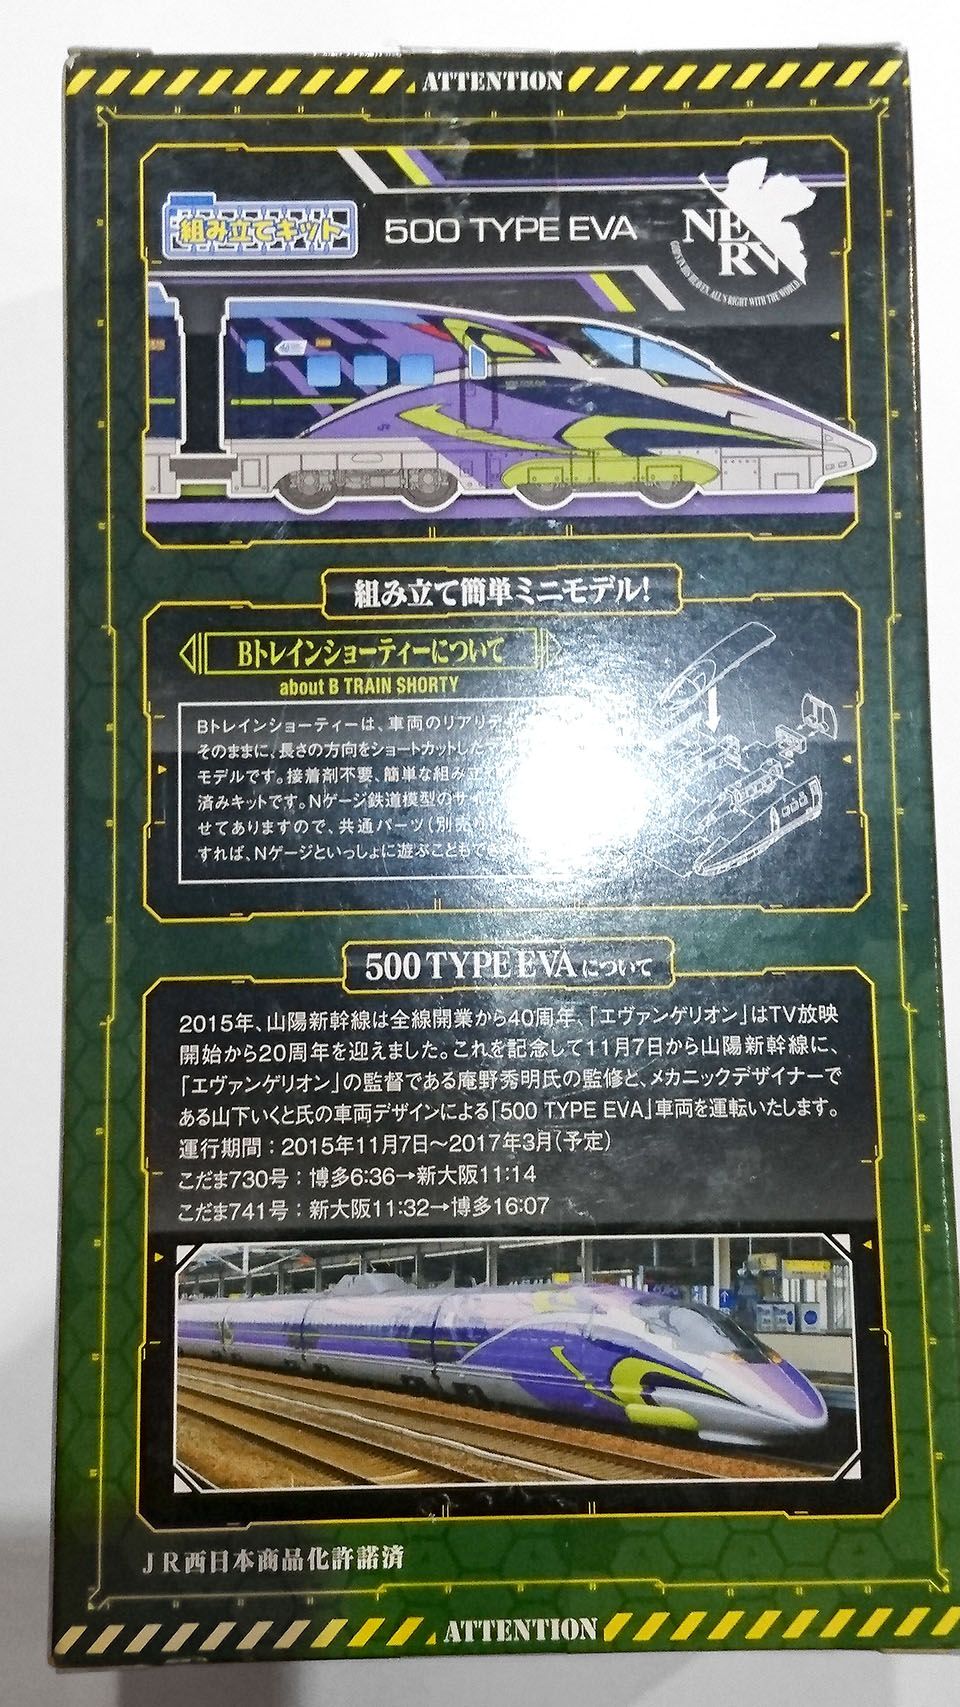  500系 TYPE EVA B-train入線報告